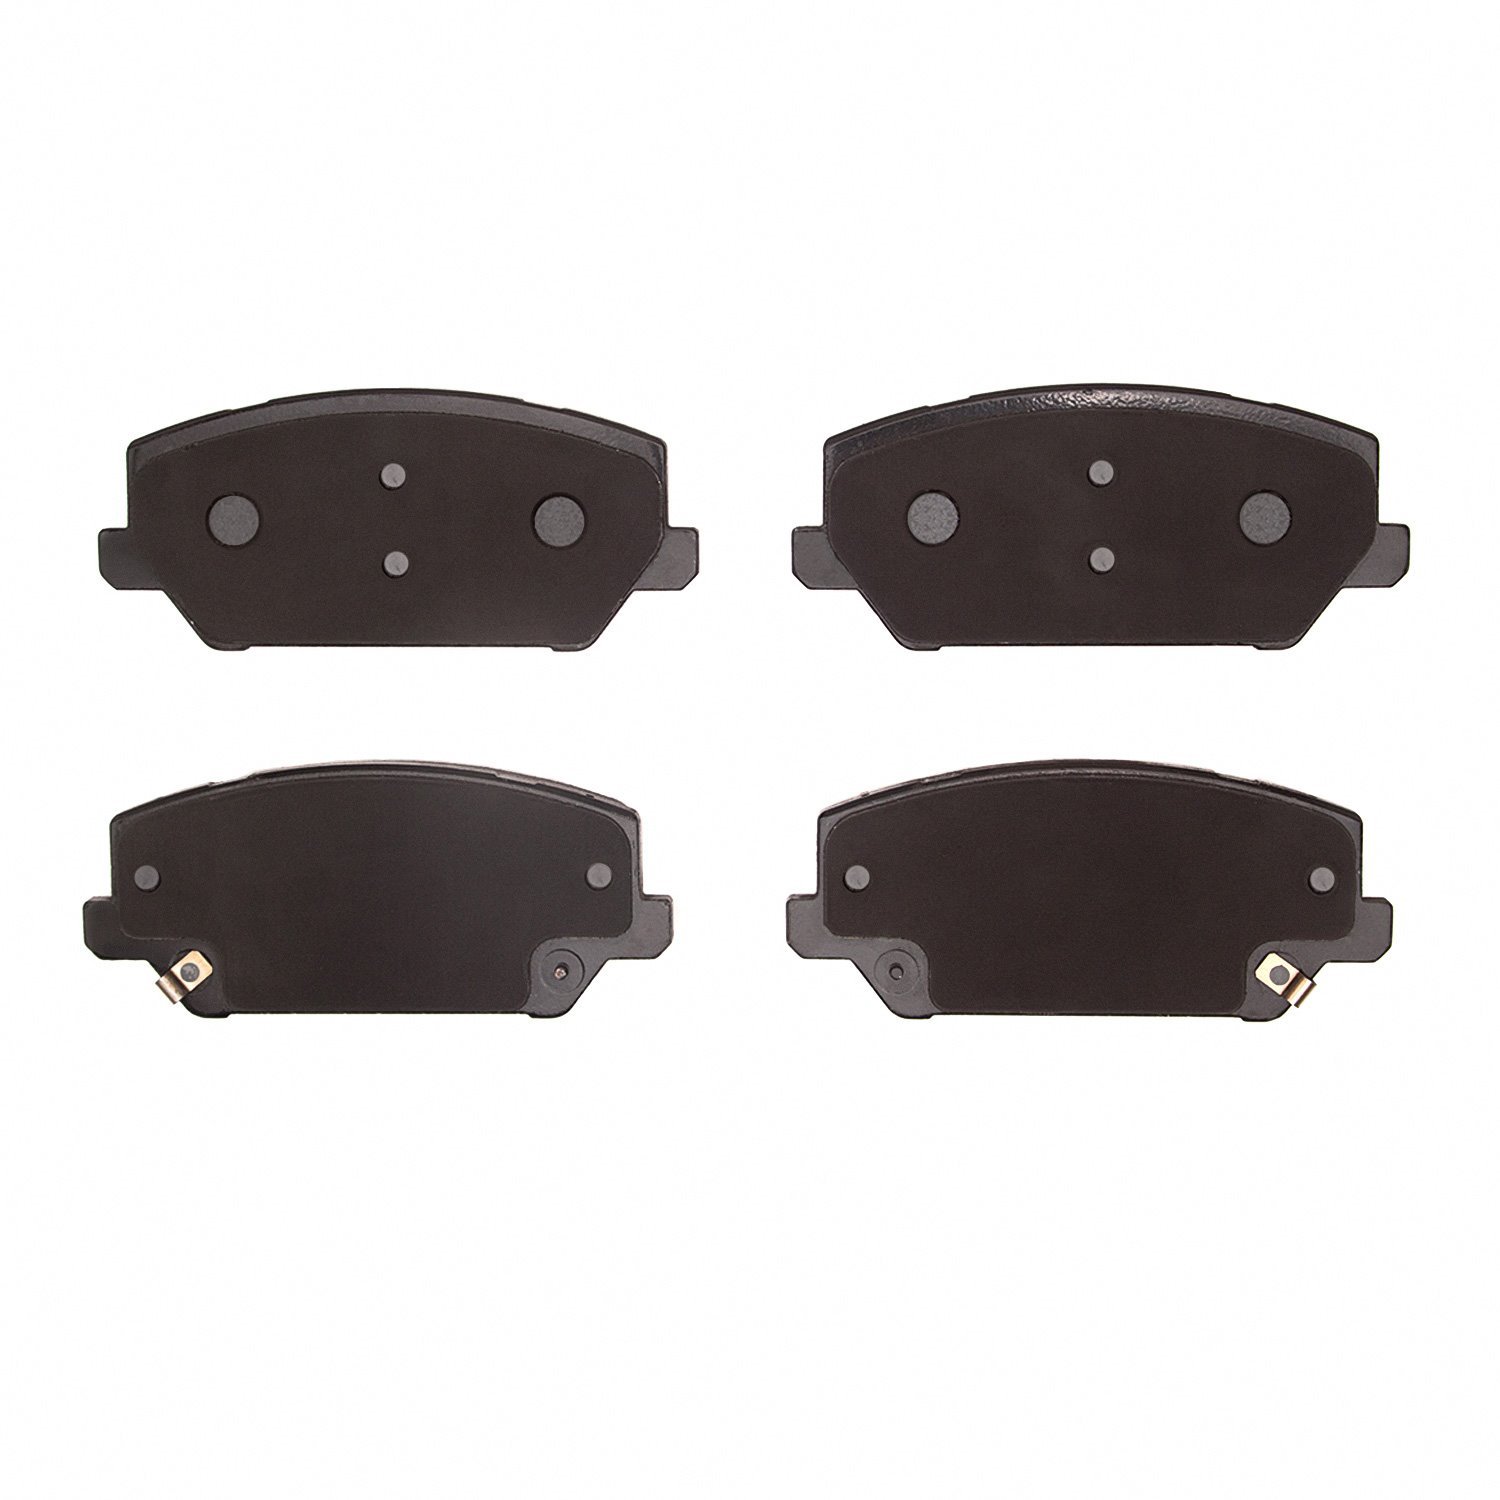 1551-2211-00 5000 Advanced Low-Metallic Brake Pads, Fits Select Kia/Hyundai/Genesis, Position: Front